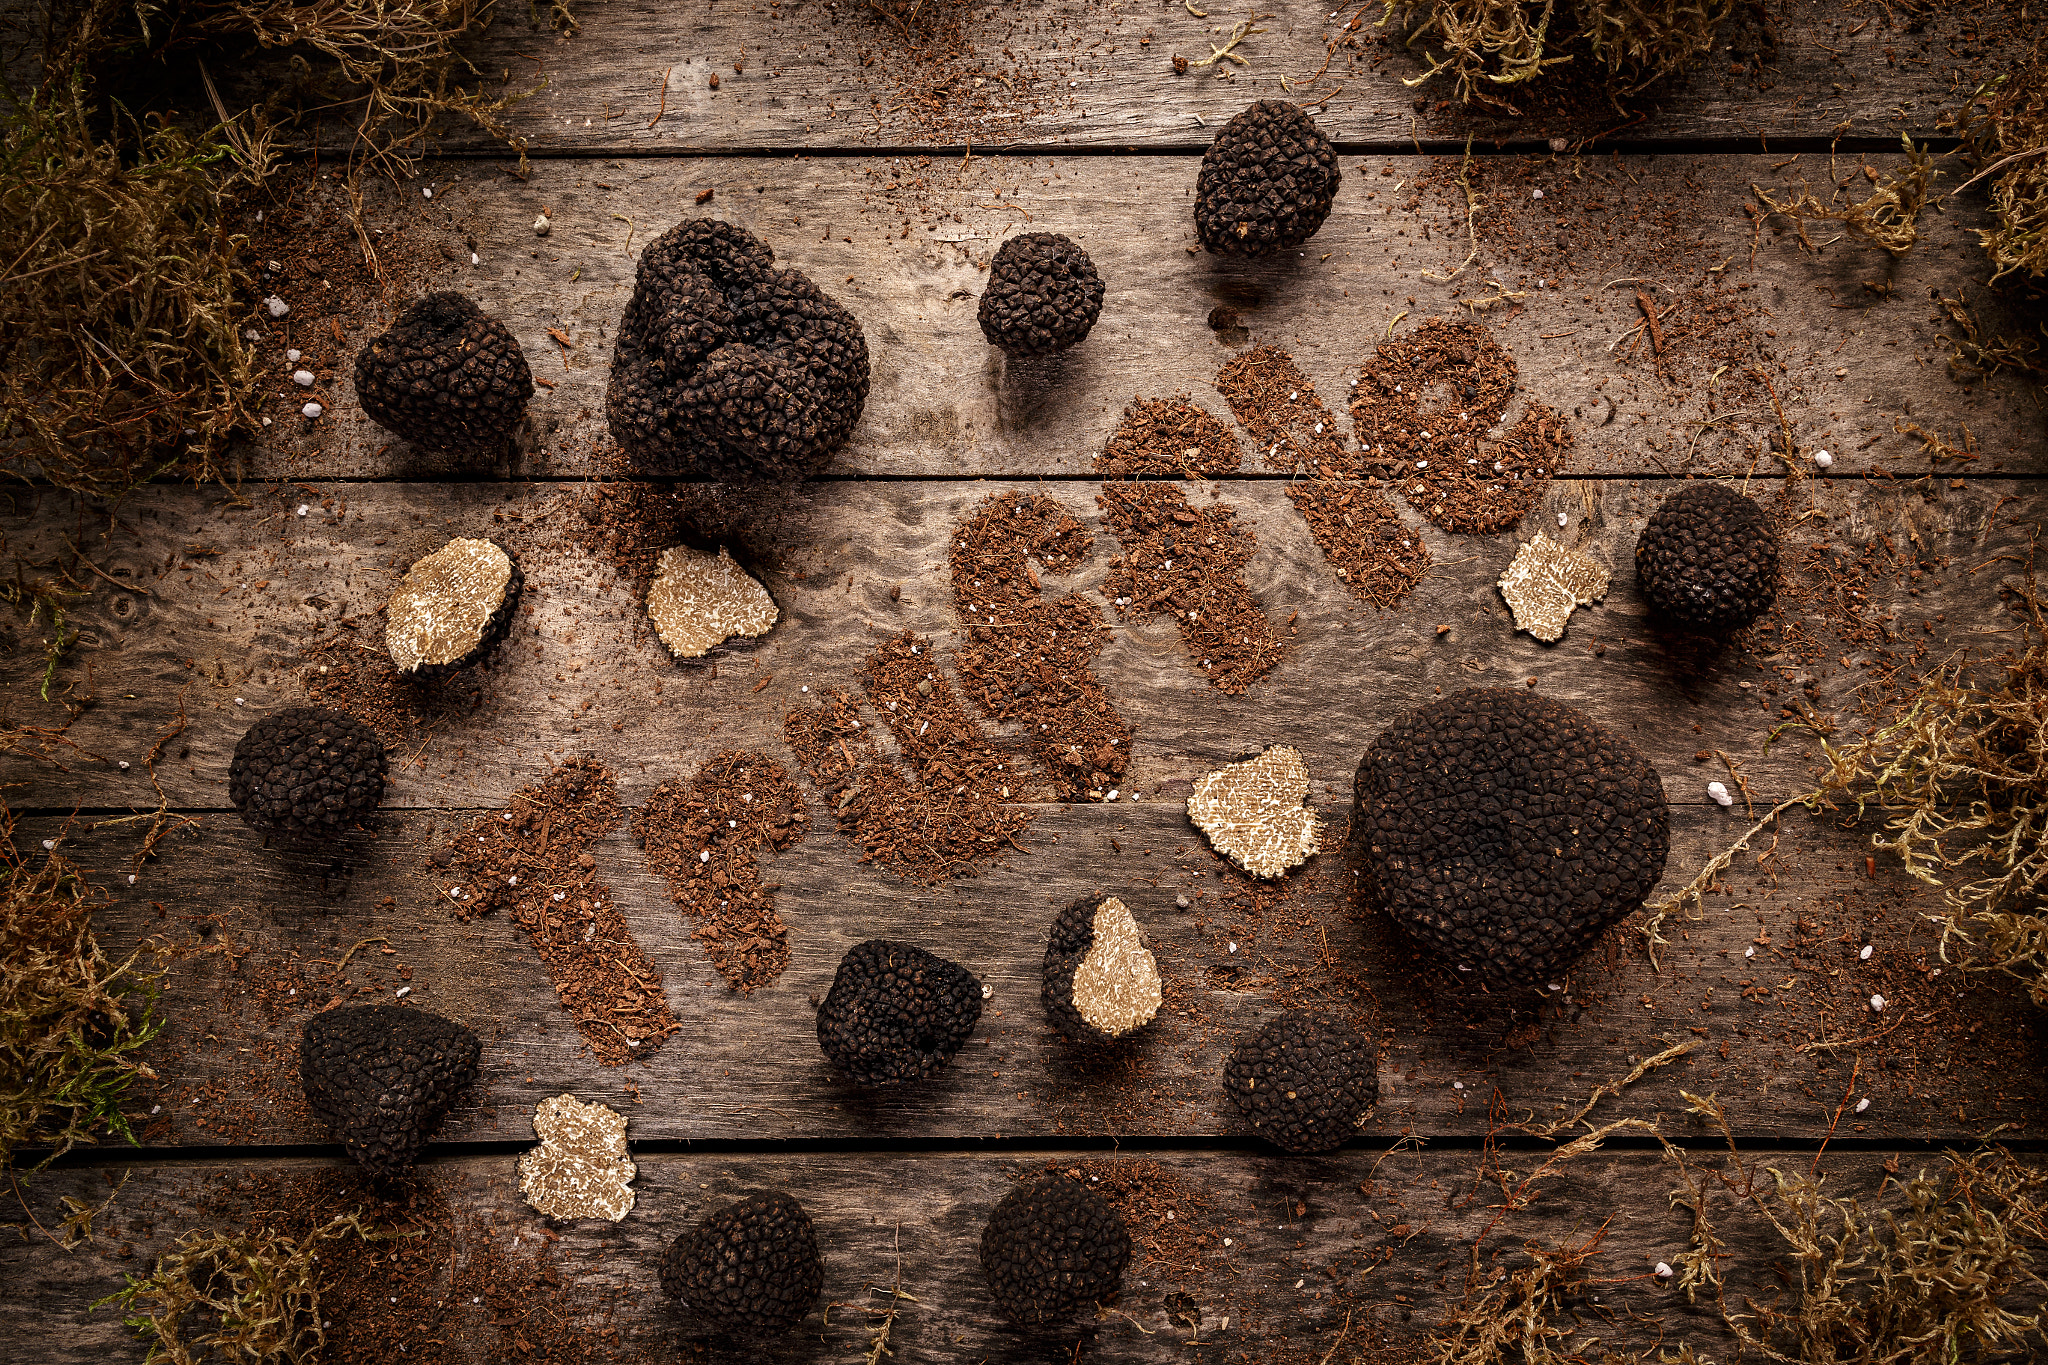 Expensive rare black truffle mushroom